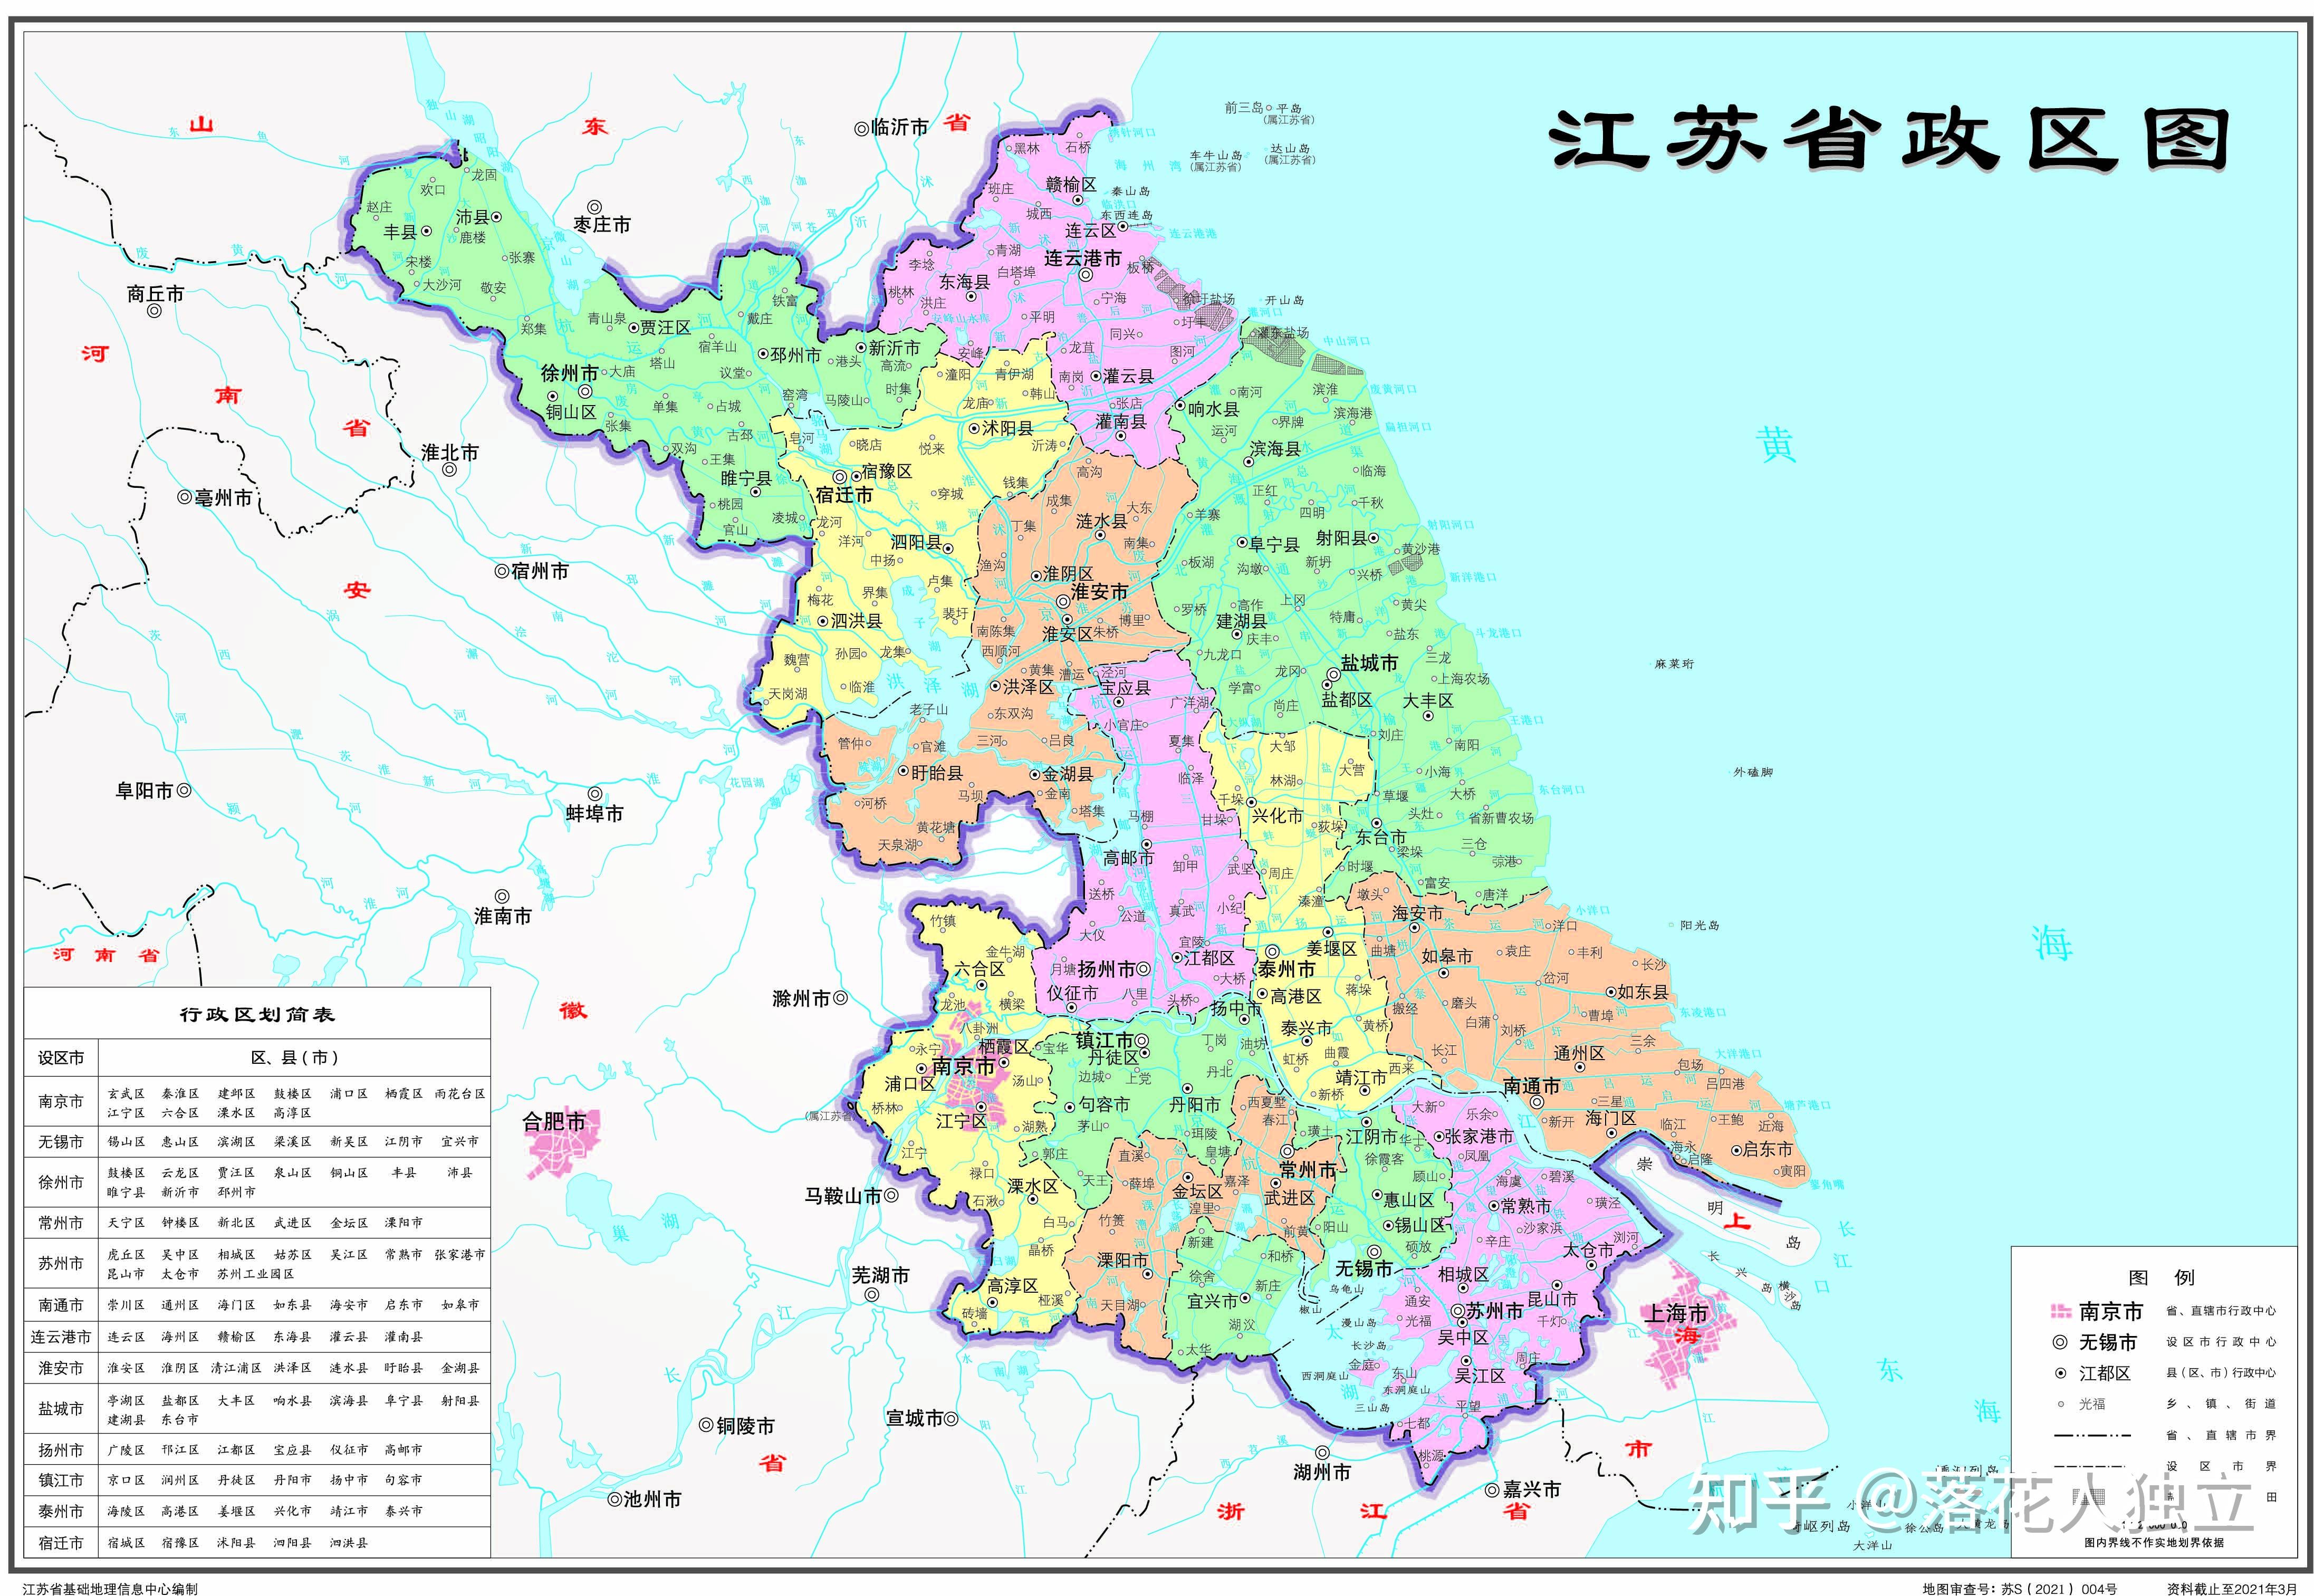 江苏地图:http://wwwjiangsugov